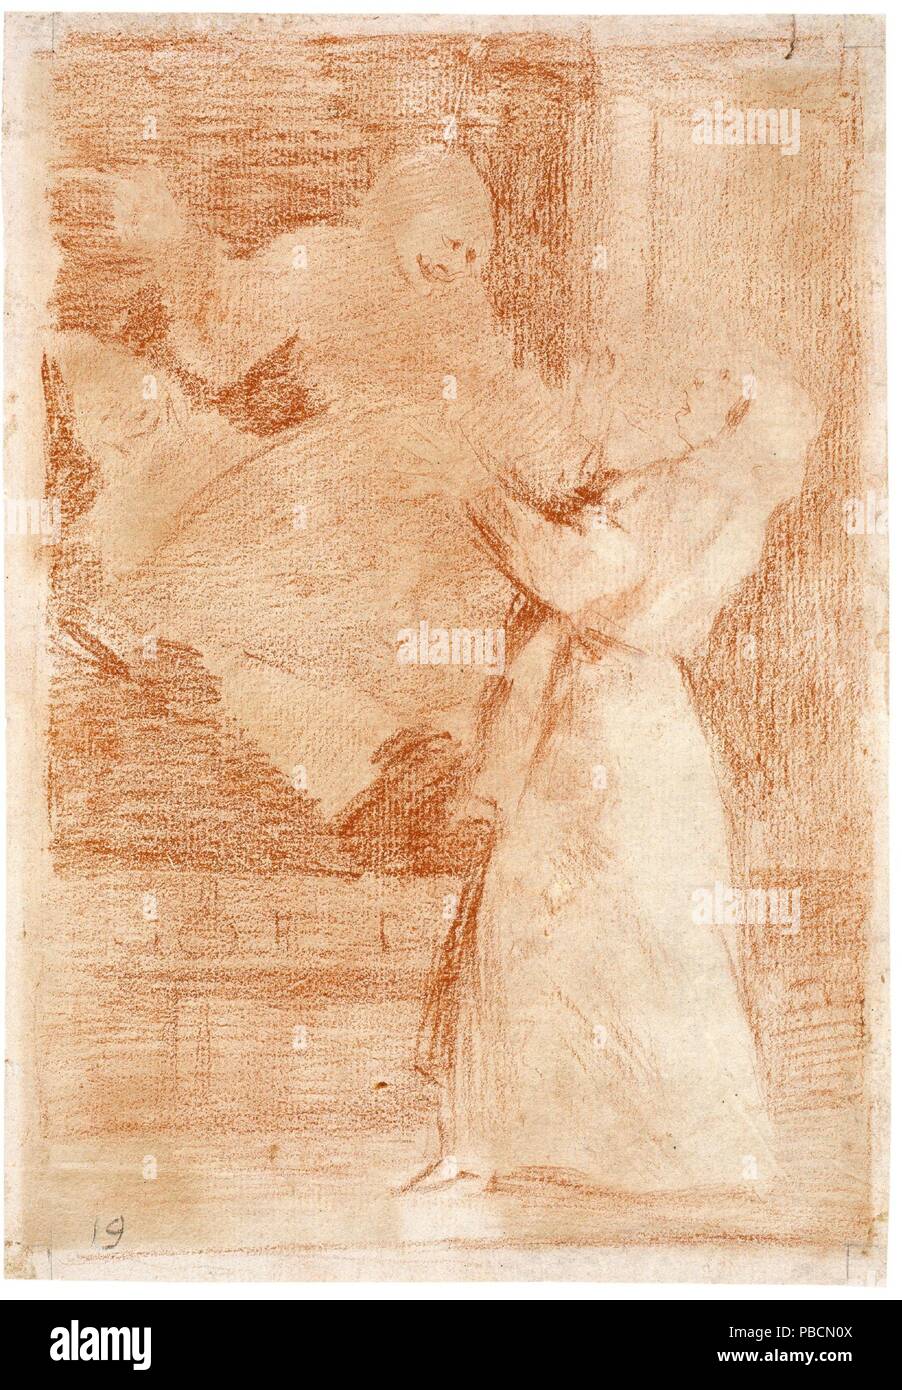 Francisco de Goya y Lucientes/'Dauf?t schreien, Idiot". Ca. 1797. Rote Kreide auf Bütten. Museum: Museo del Prado, Madrid, España. Stockfoto